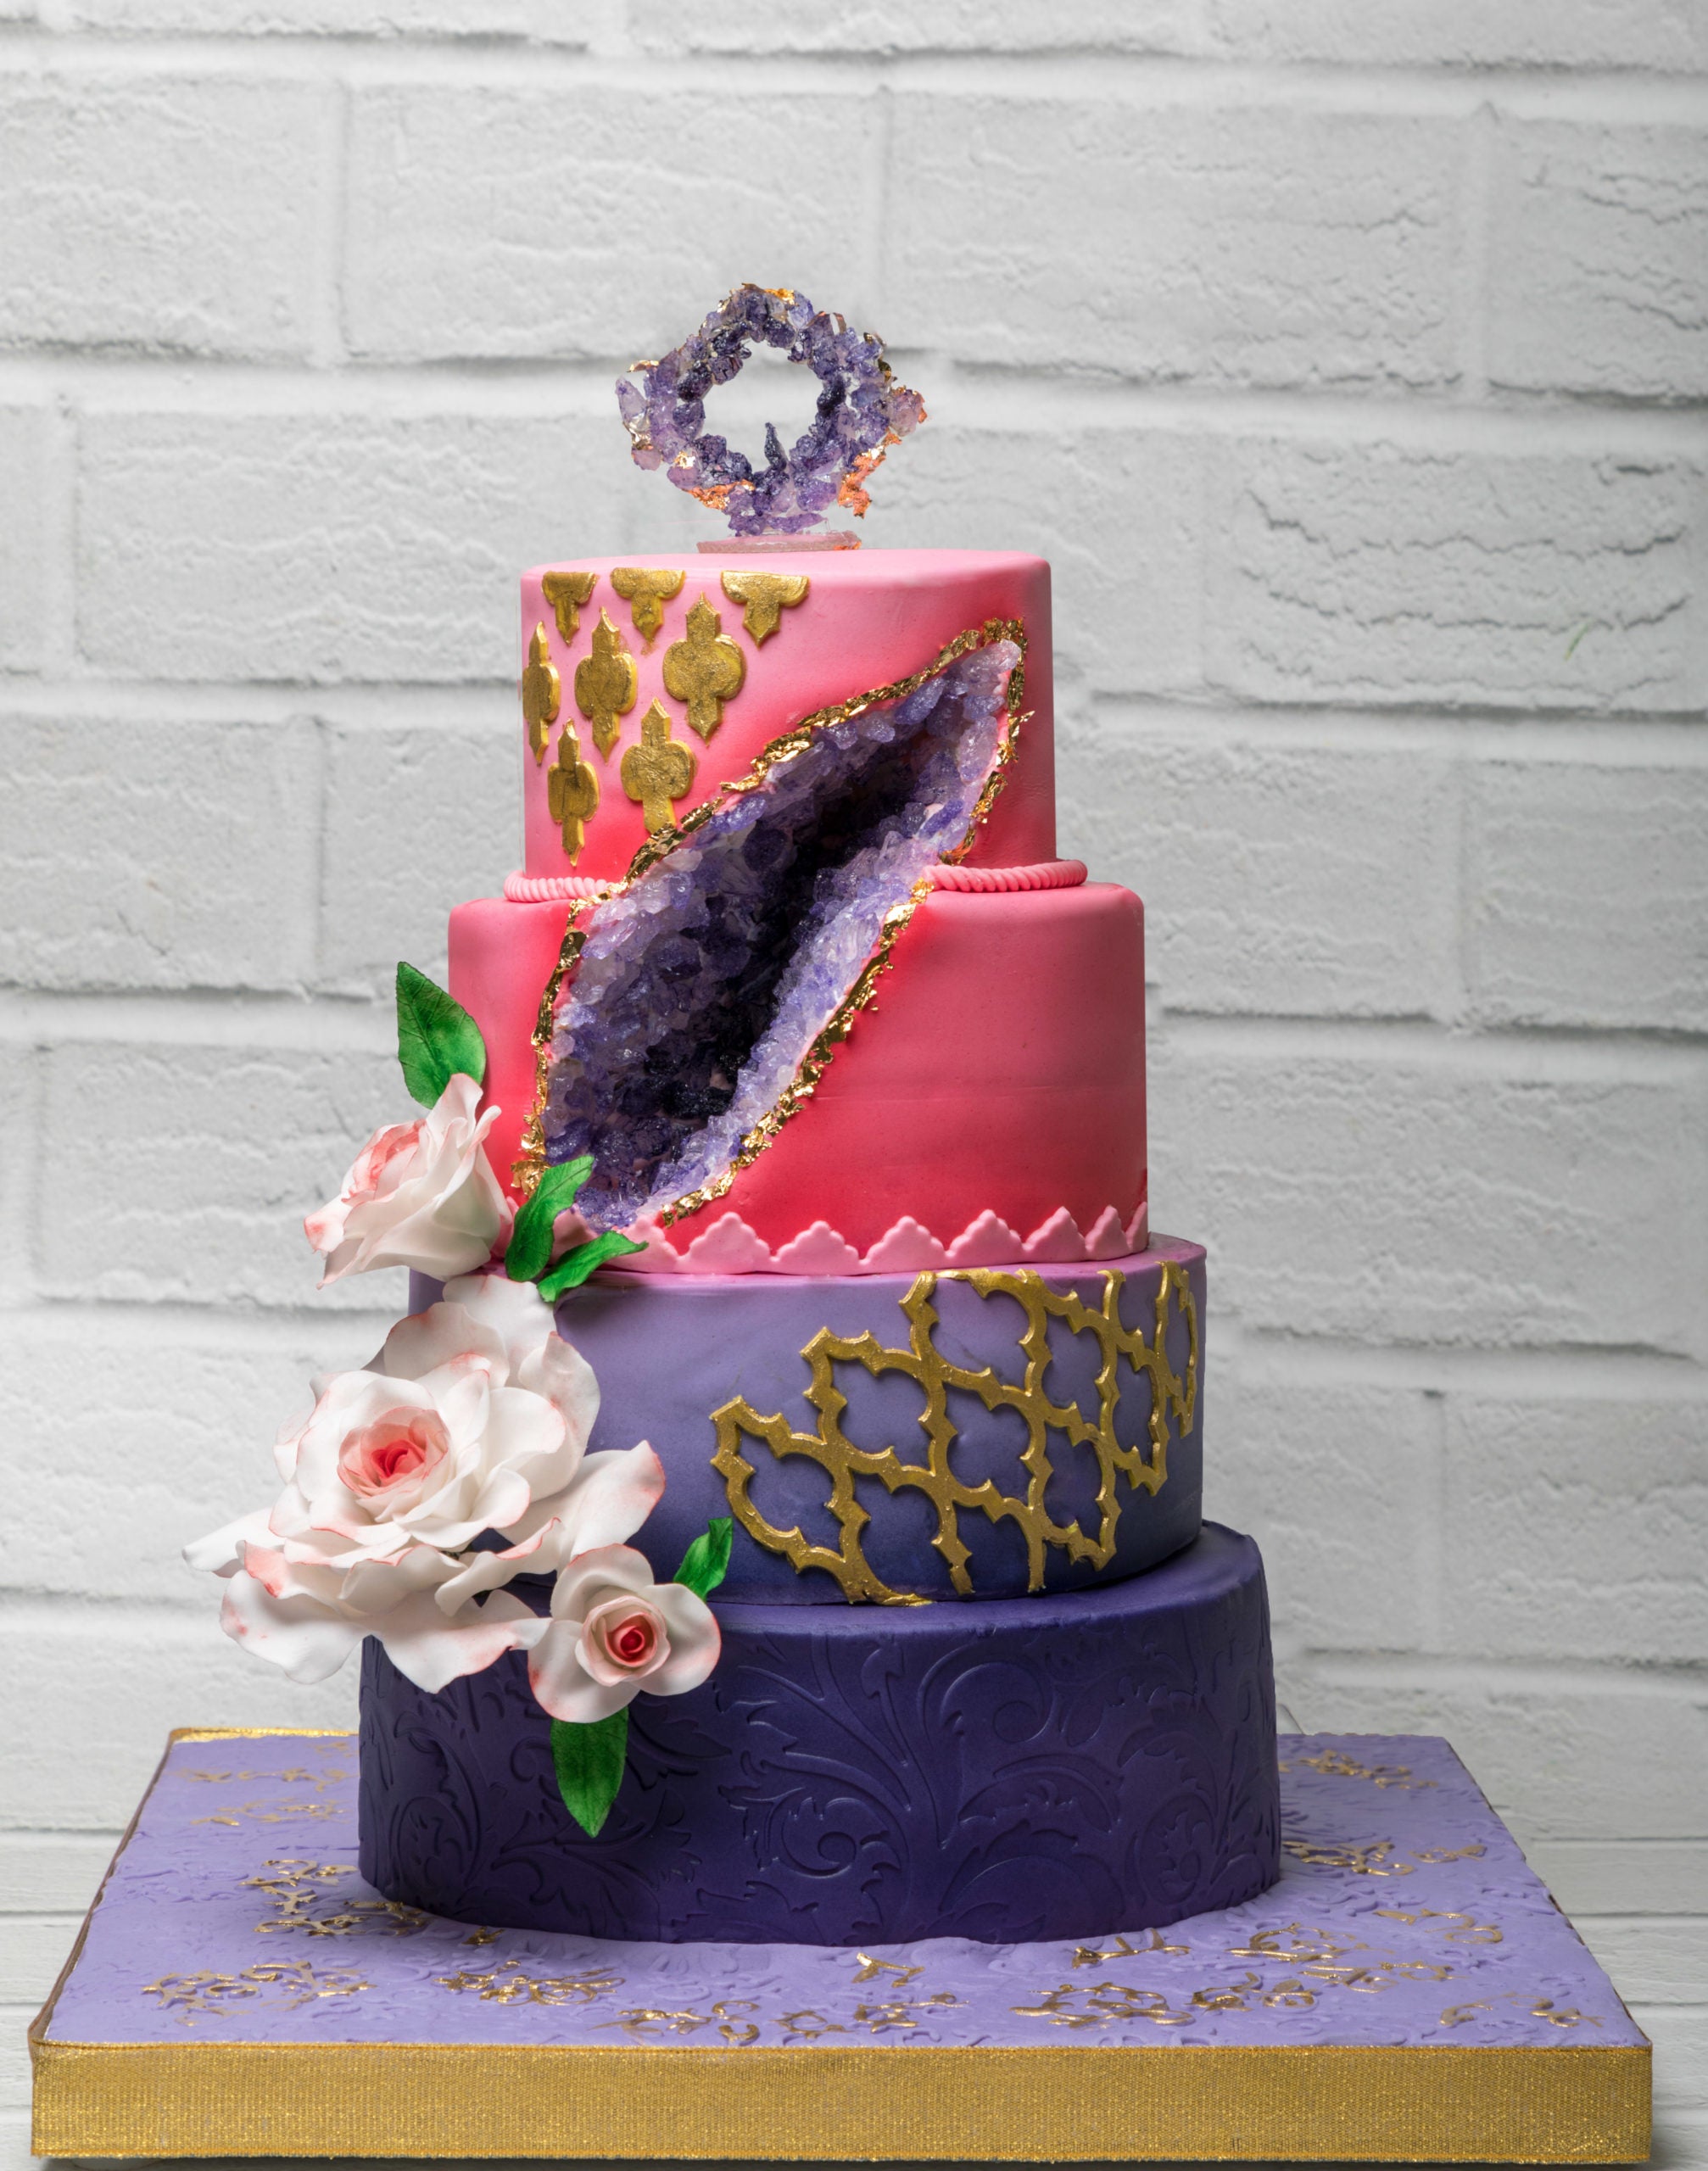 Vintage Retro “30” Birthday Cake!! Cake Art @hellomeliss #palmsprings  #palmspringsbirthday #overtherainbowdesserts | Instagram